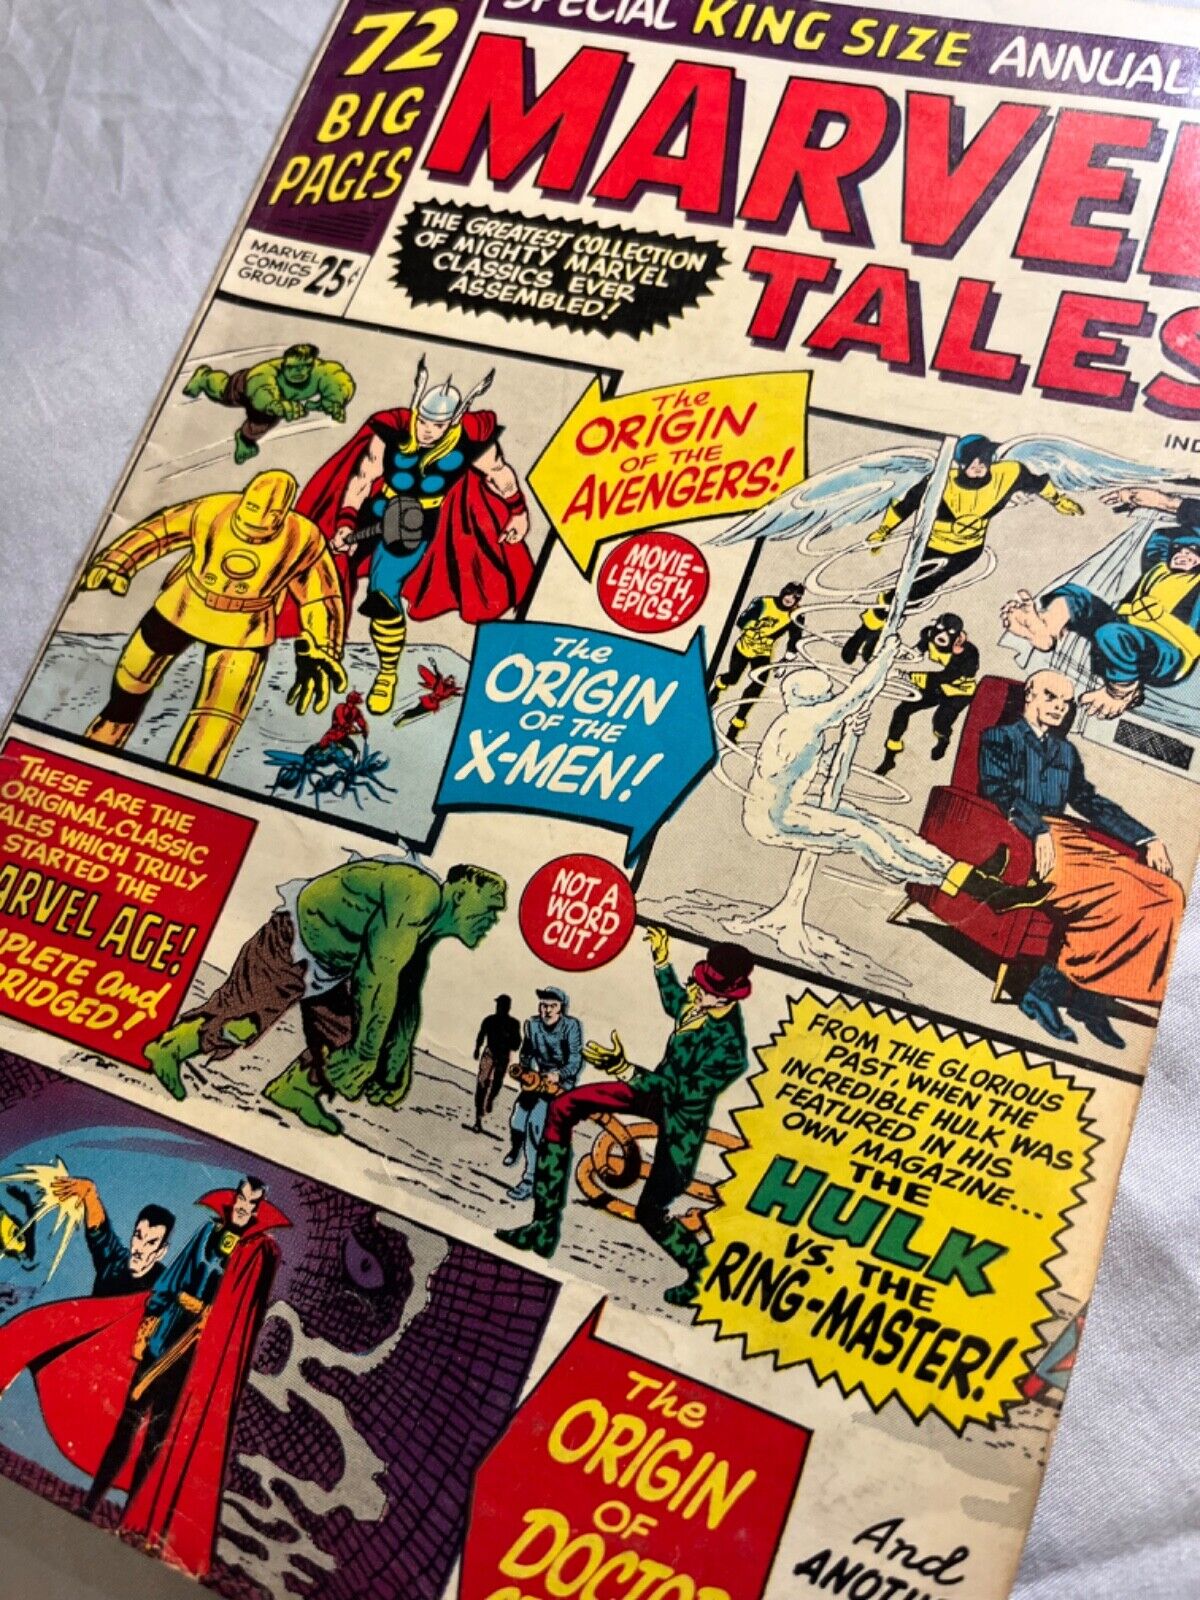 Marvel Tales #2 - Reprints X-Men, Avengers #1 (Marvel, 1964)